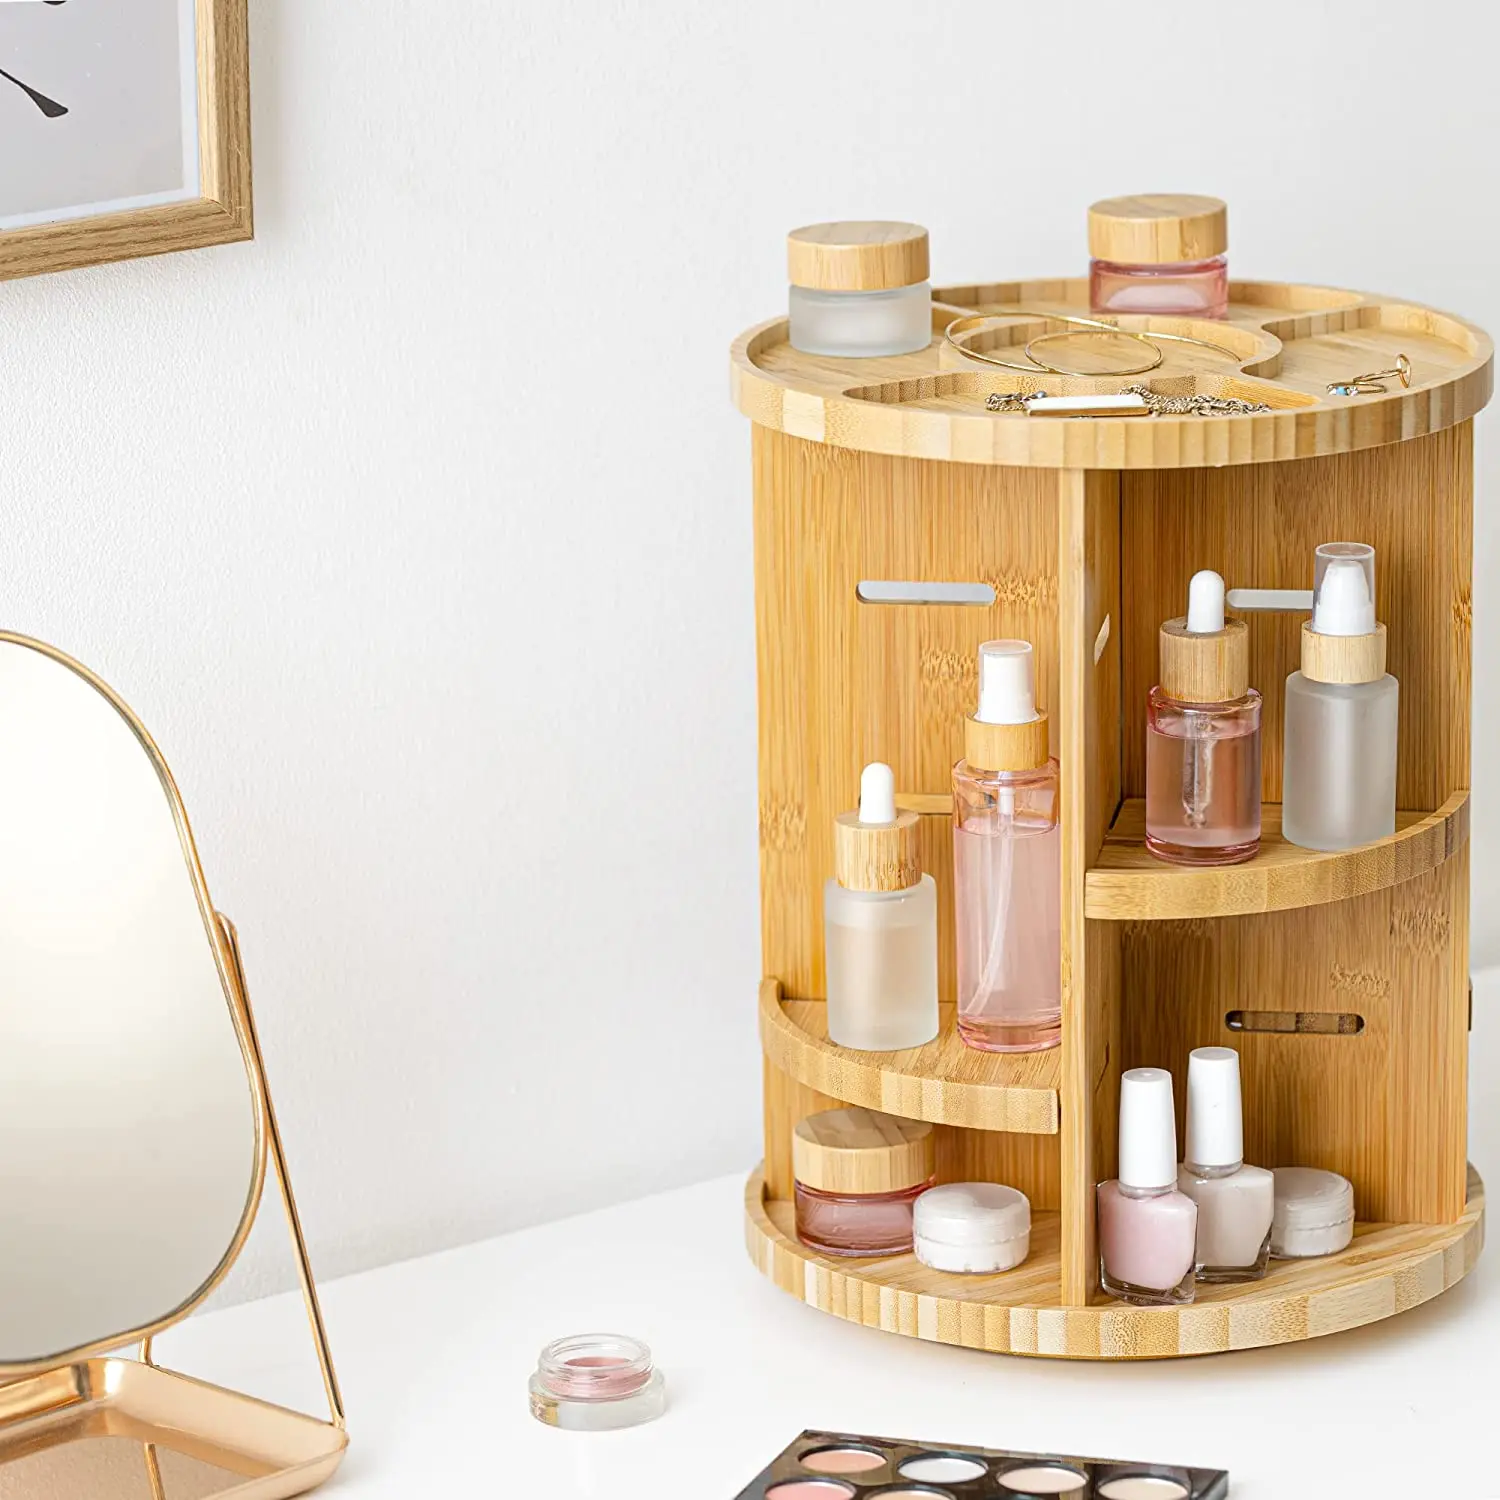 Bamboo Handmade Wood Beauty Makeup Brush Organizer Display Tray Holder Station Perfect Gift for Christmas